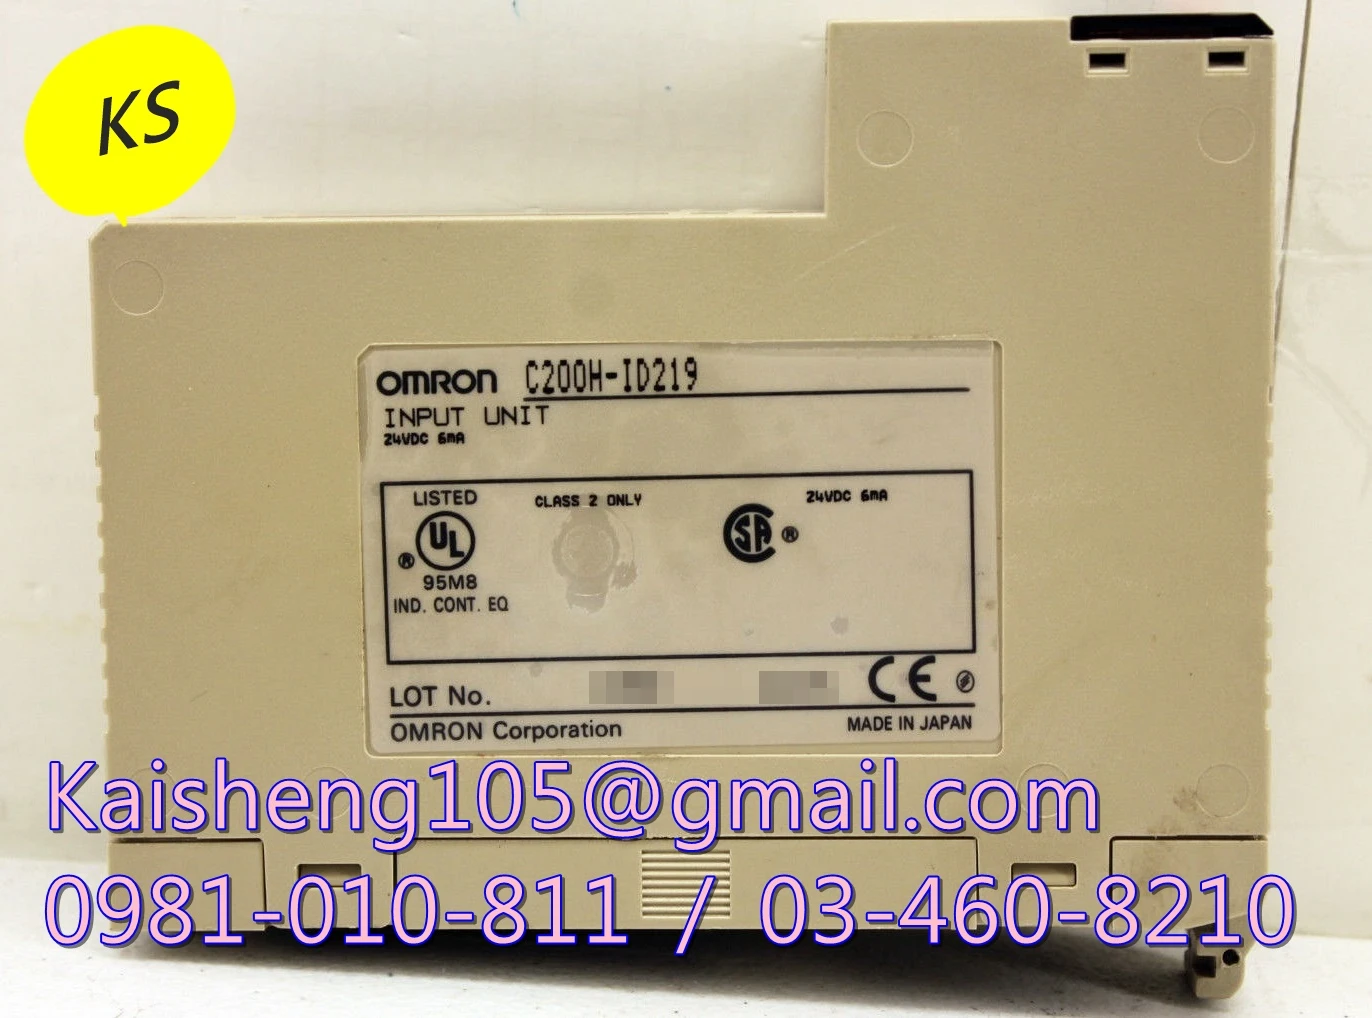 OMRON模組PLC:C200H-ID219